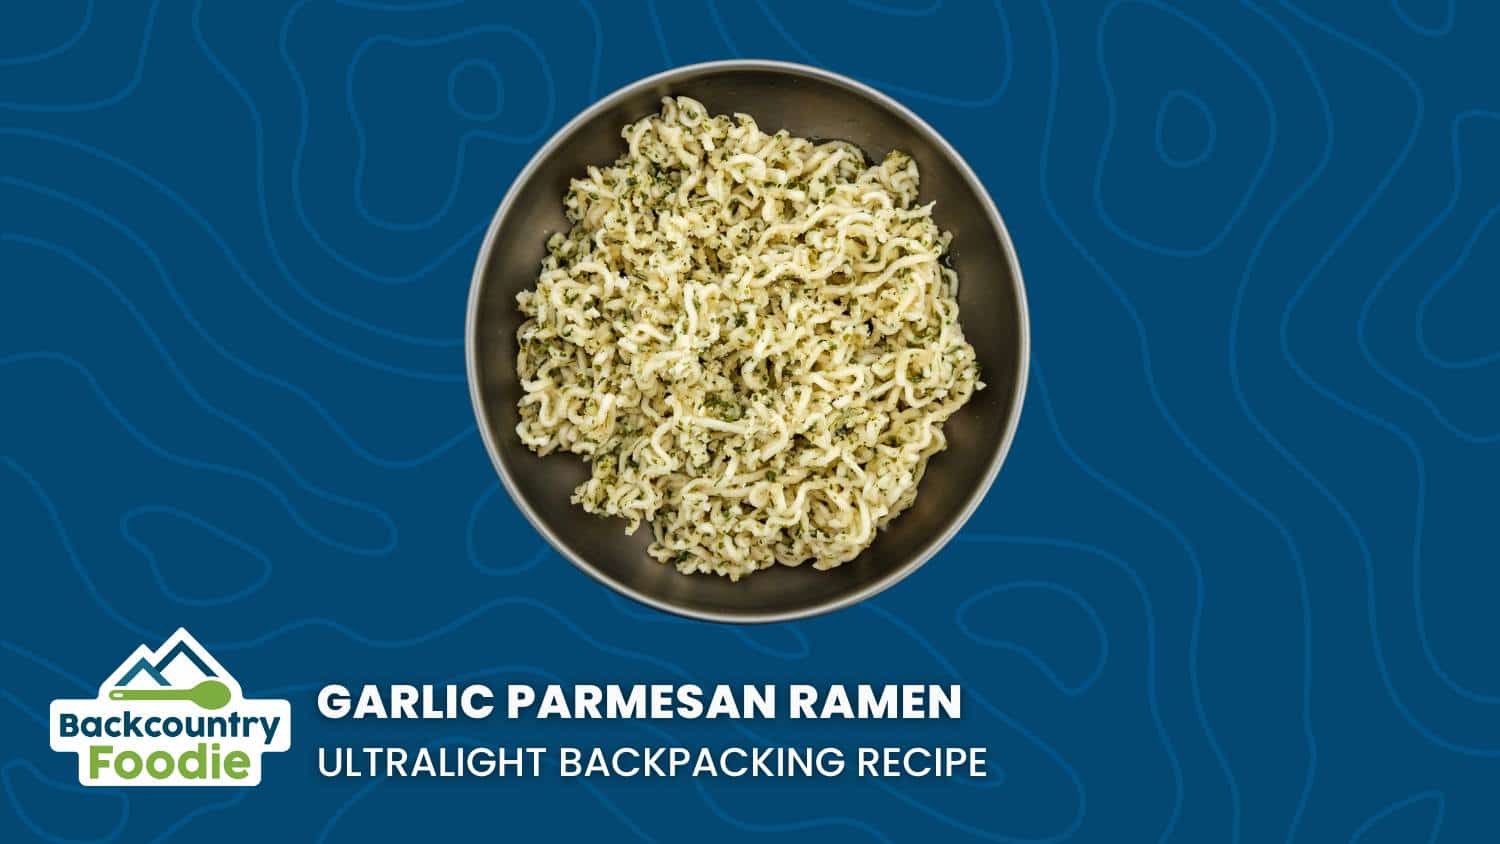 Backcountry Foodie Garlic Parmesan Ramen DIY Ultralight Backpacking Recipe thumbnail image